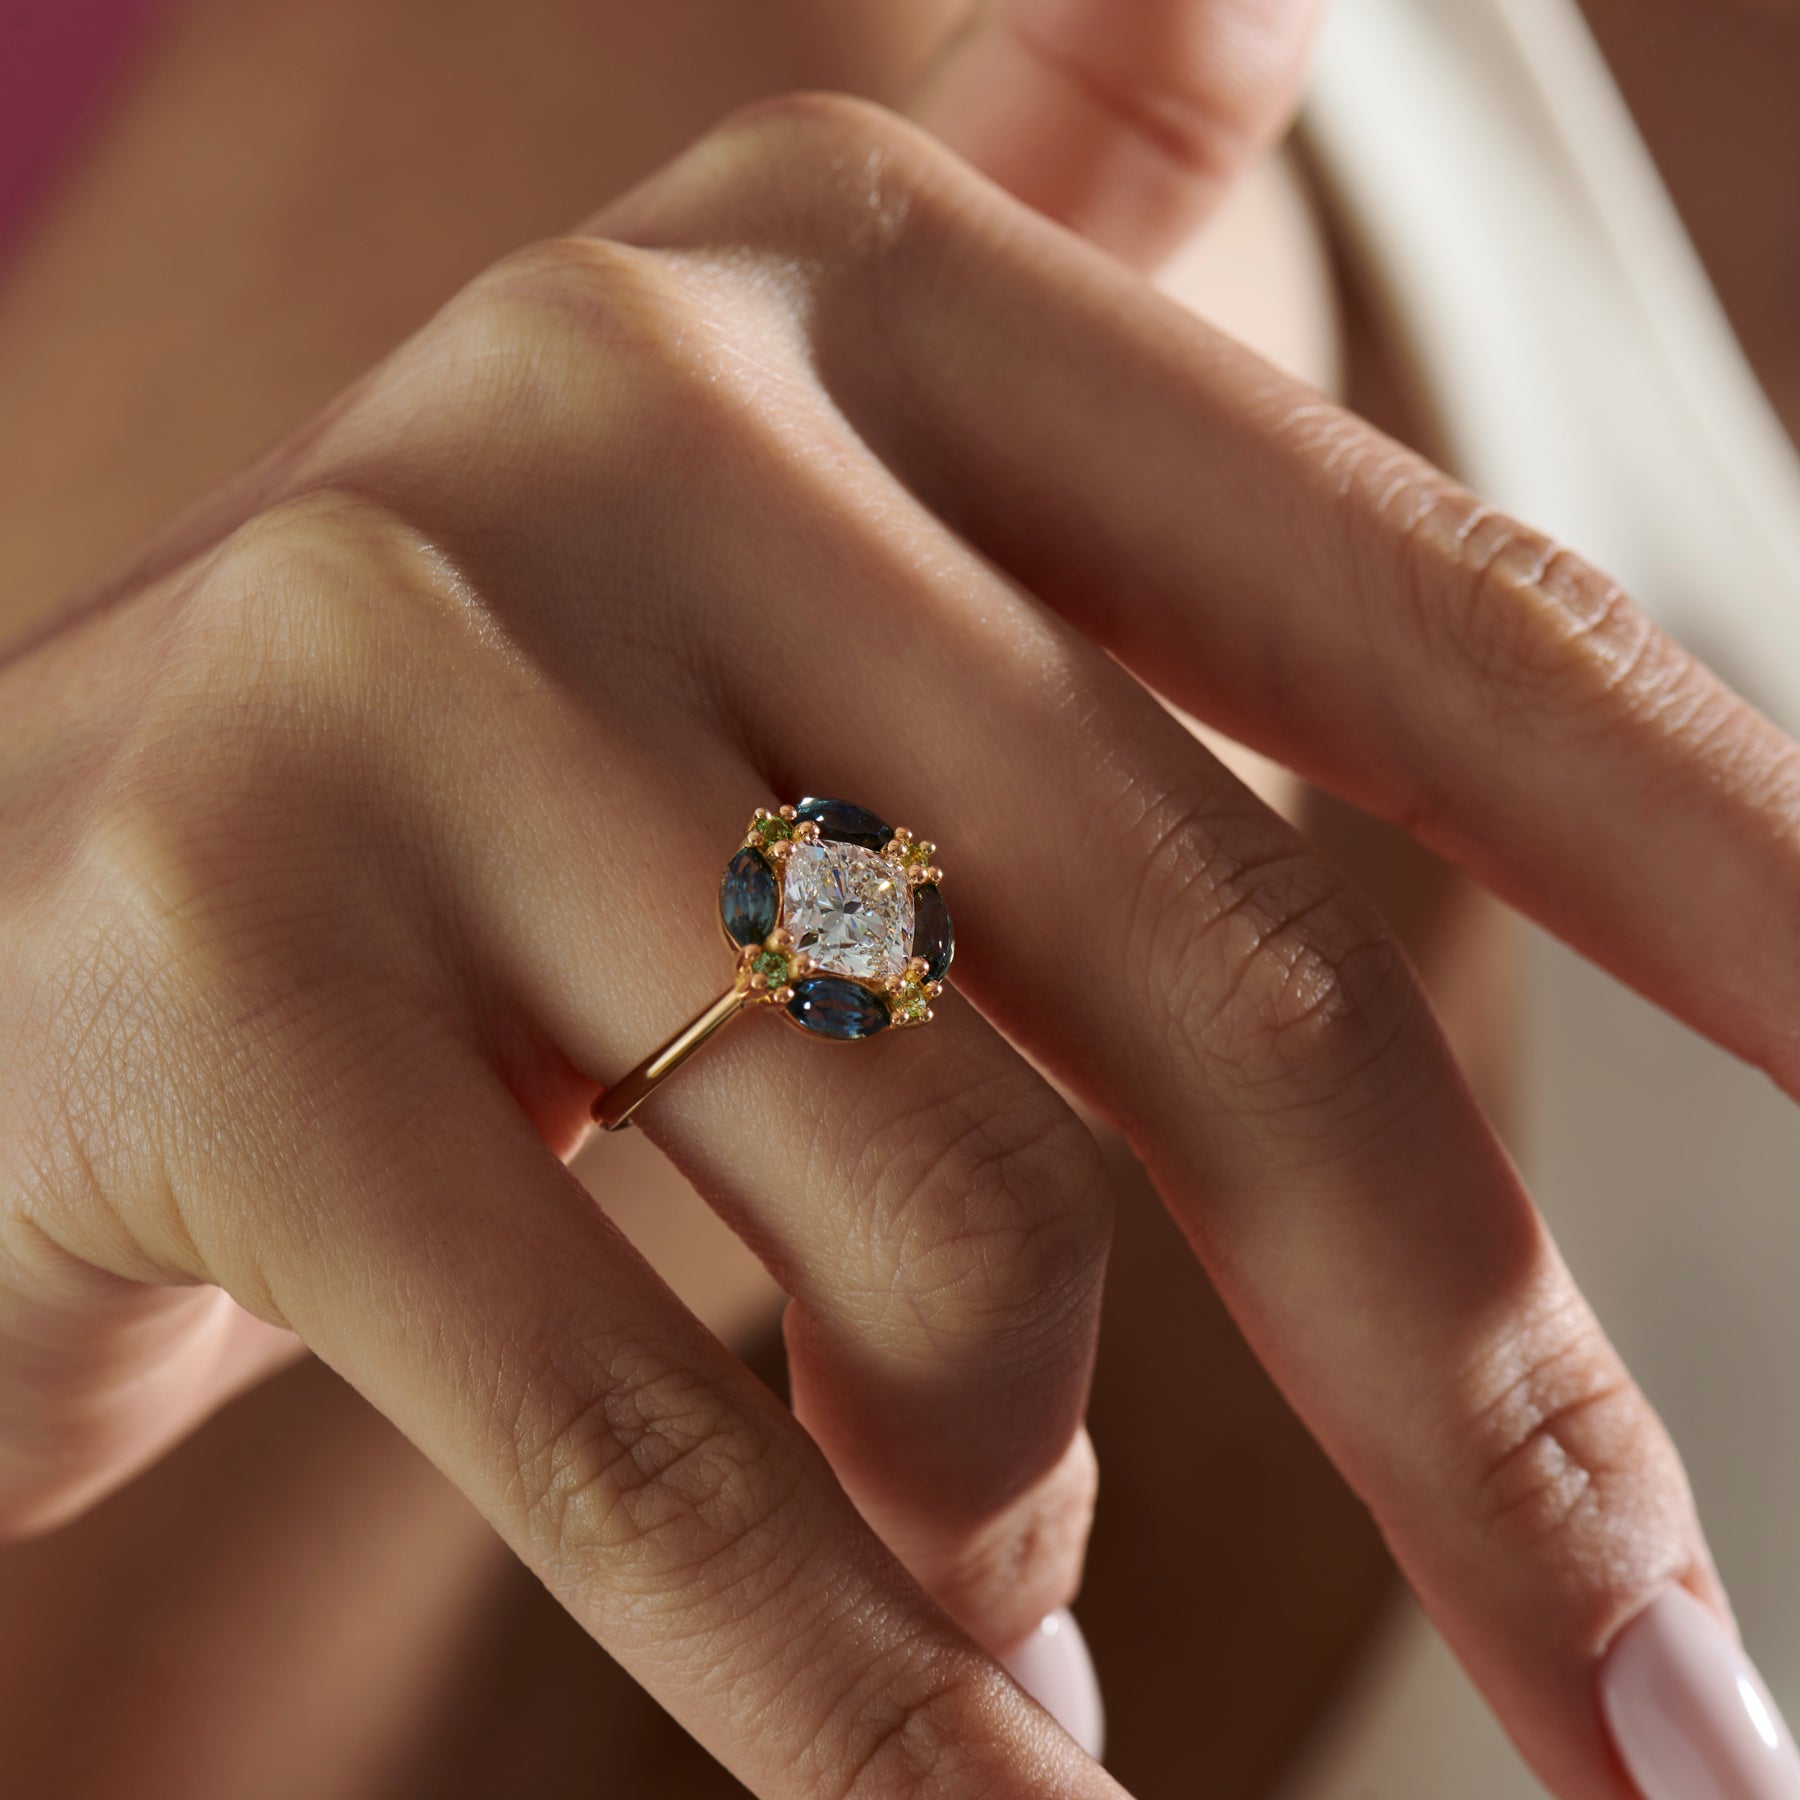 Timeless Beauty: A Blue Sapphire Ring for Women